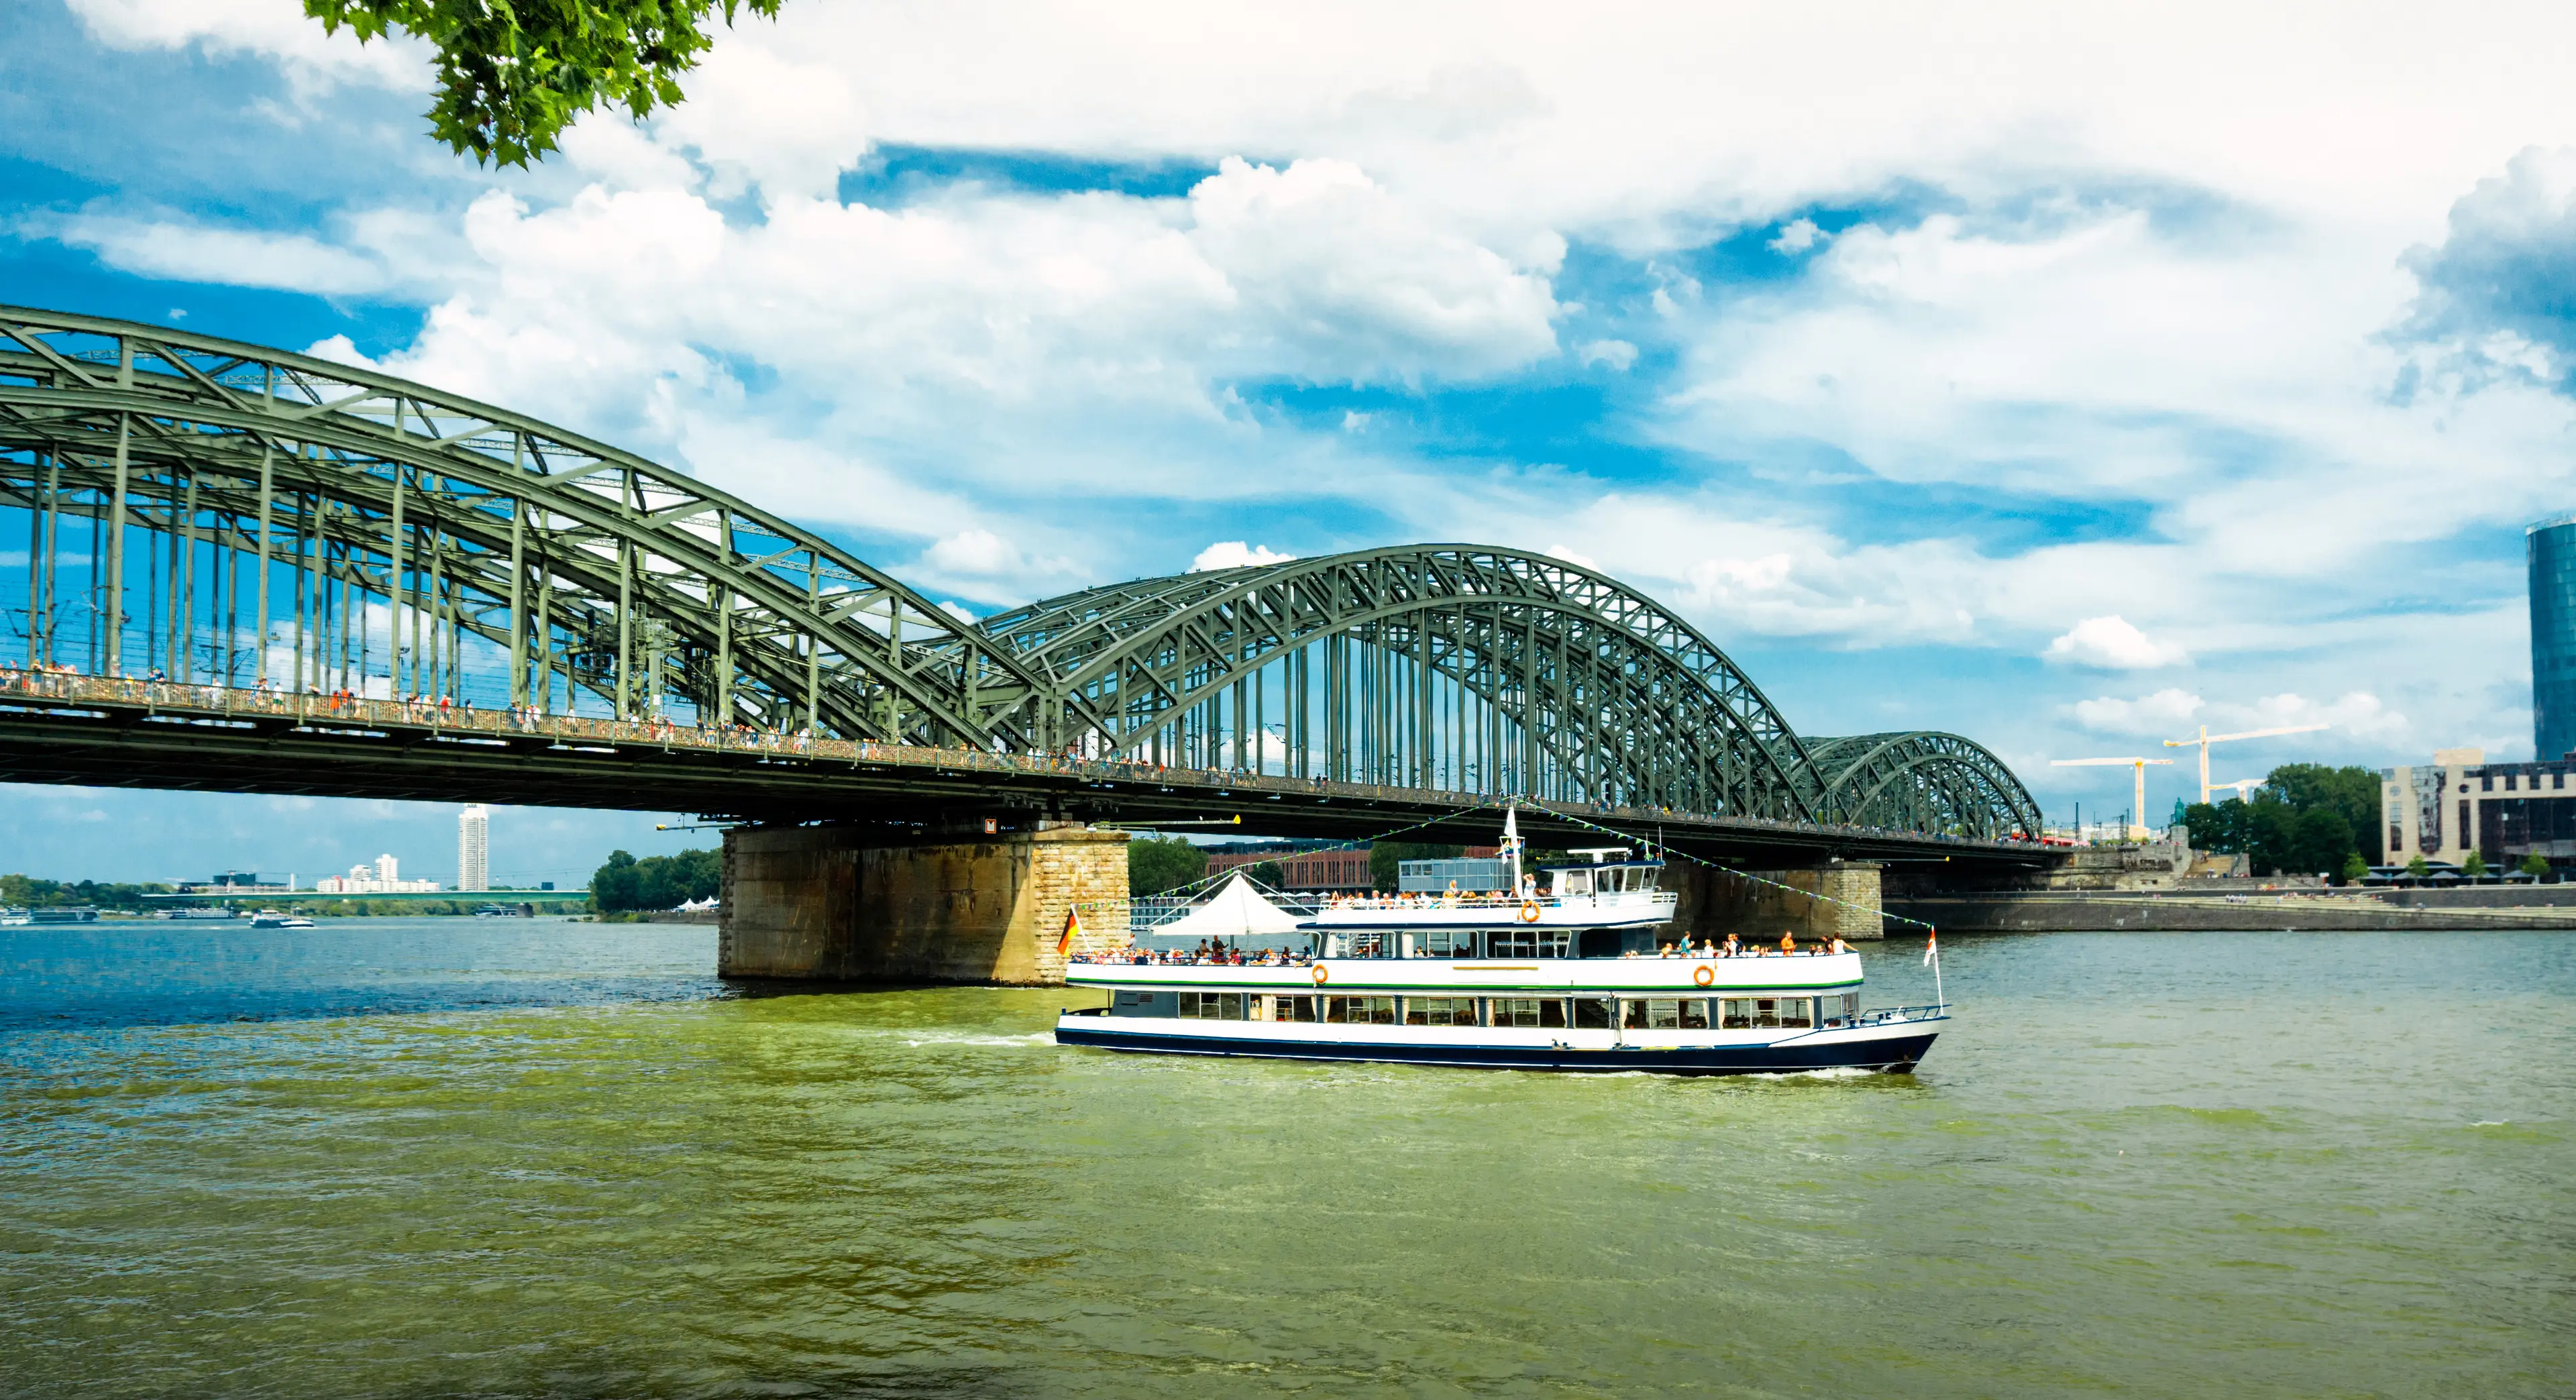 River Cruise on the Rhine